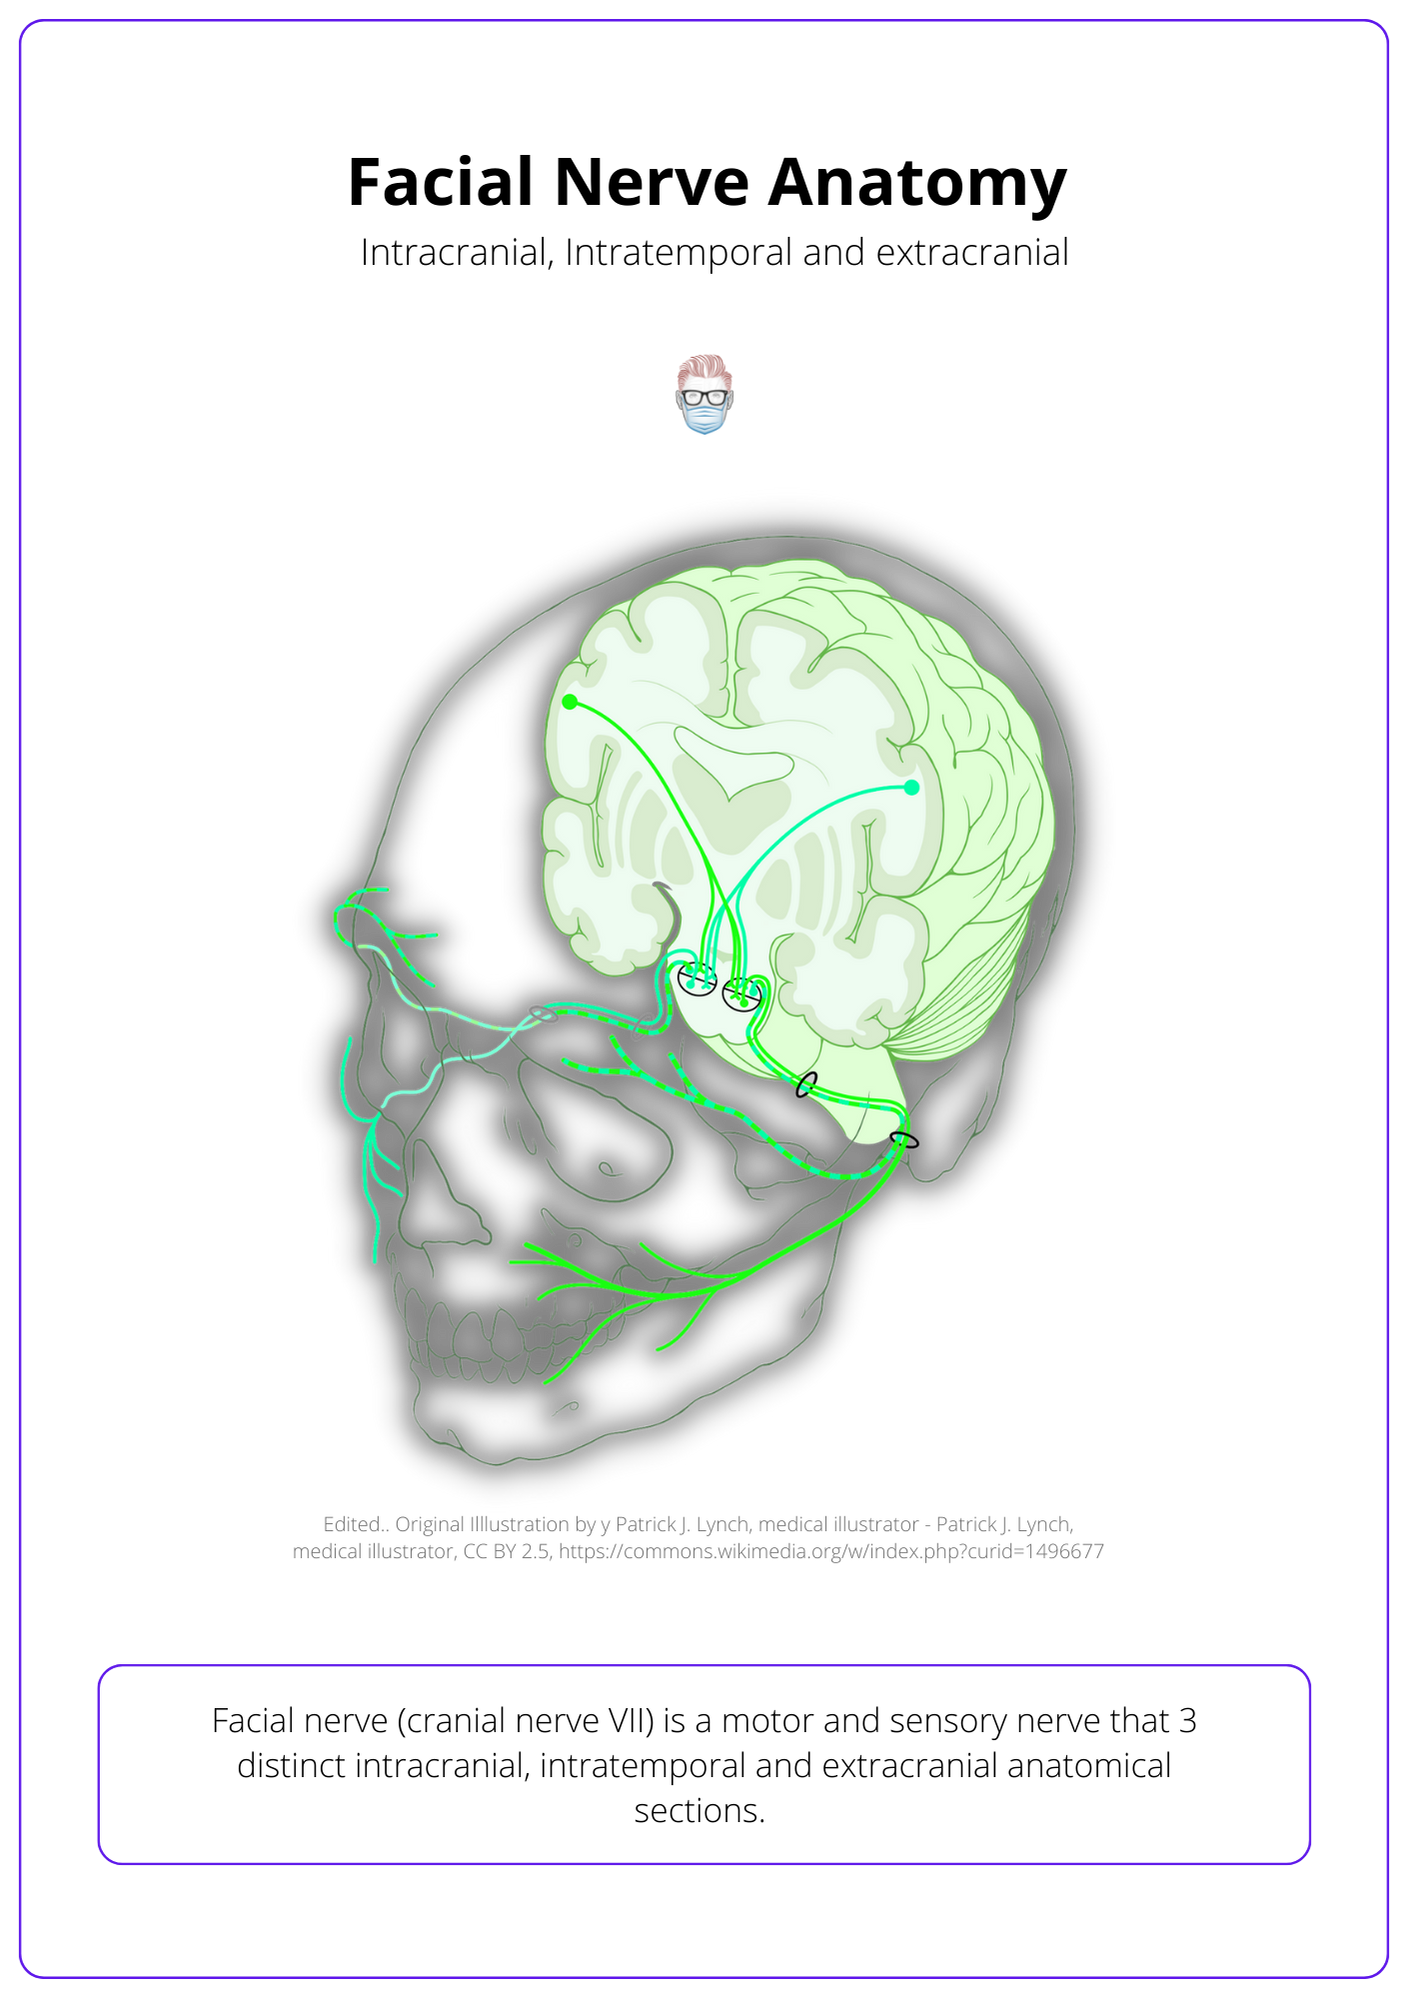 facial nerve intracranial course